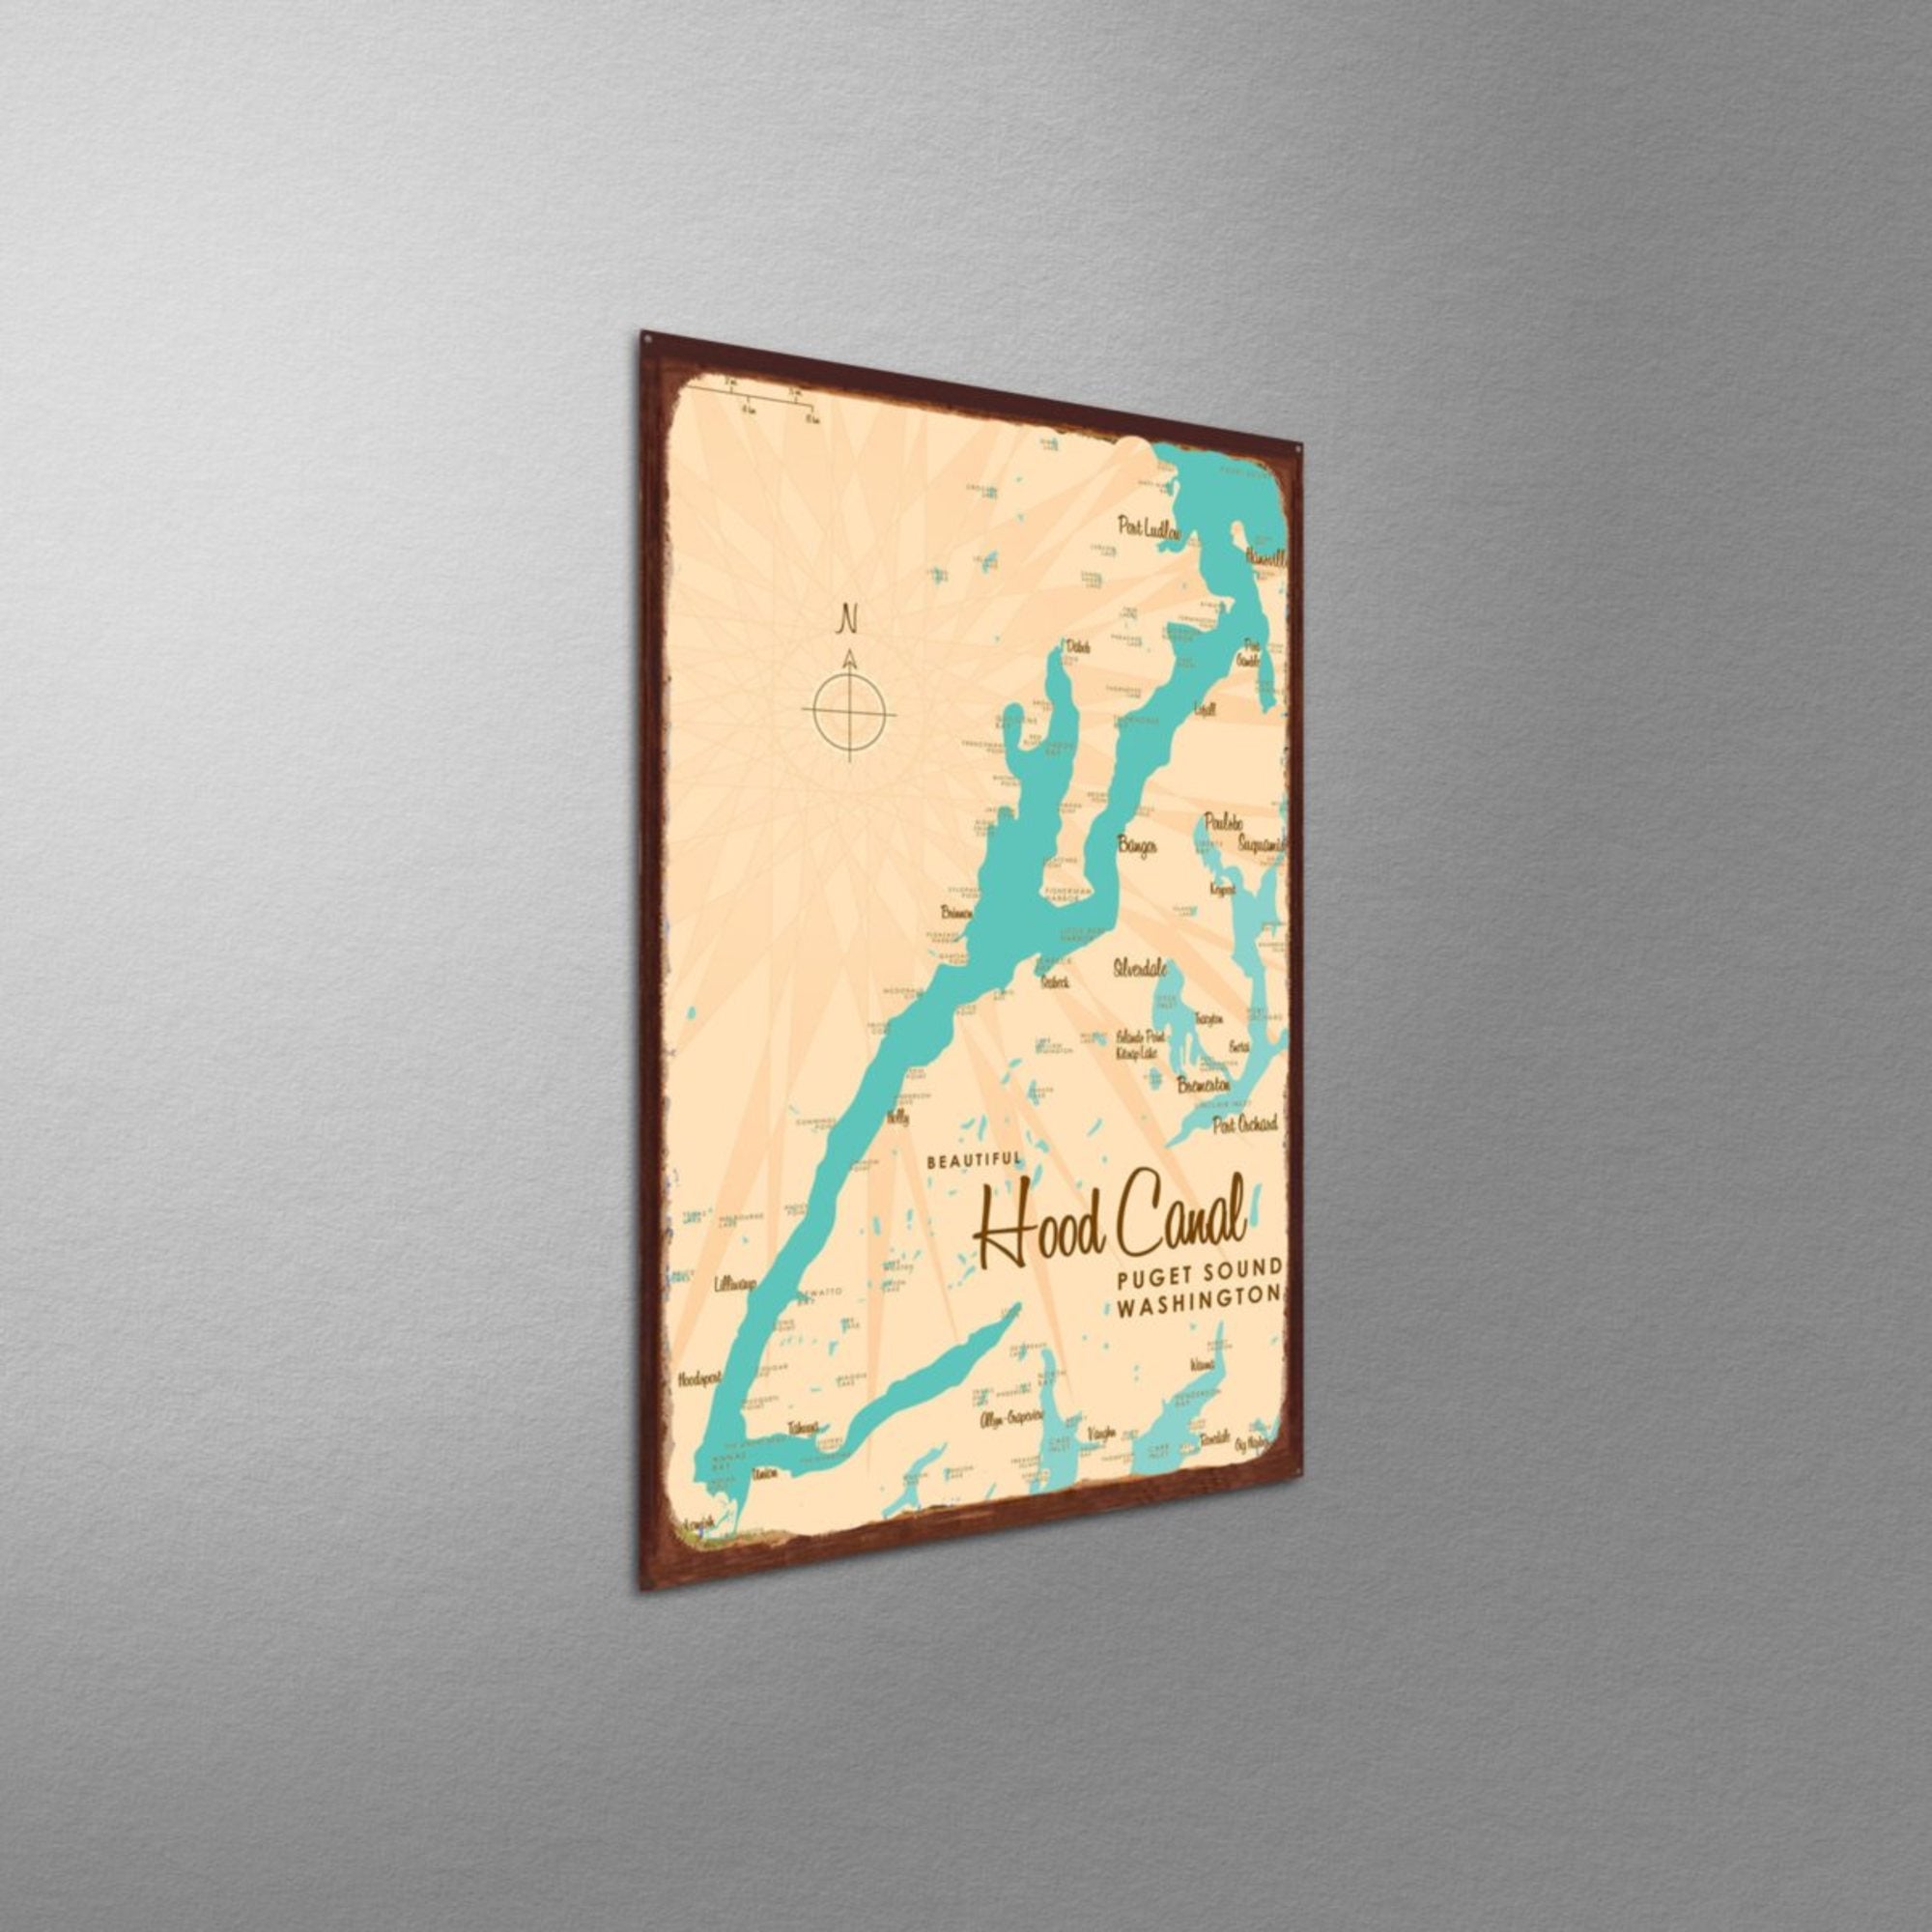 Hood Canal Washington, Rustic Metal Sign Map Art